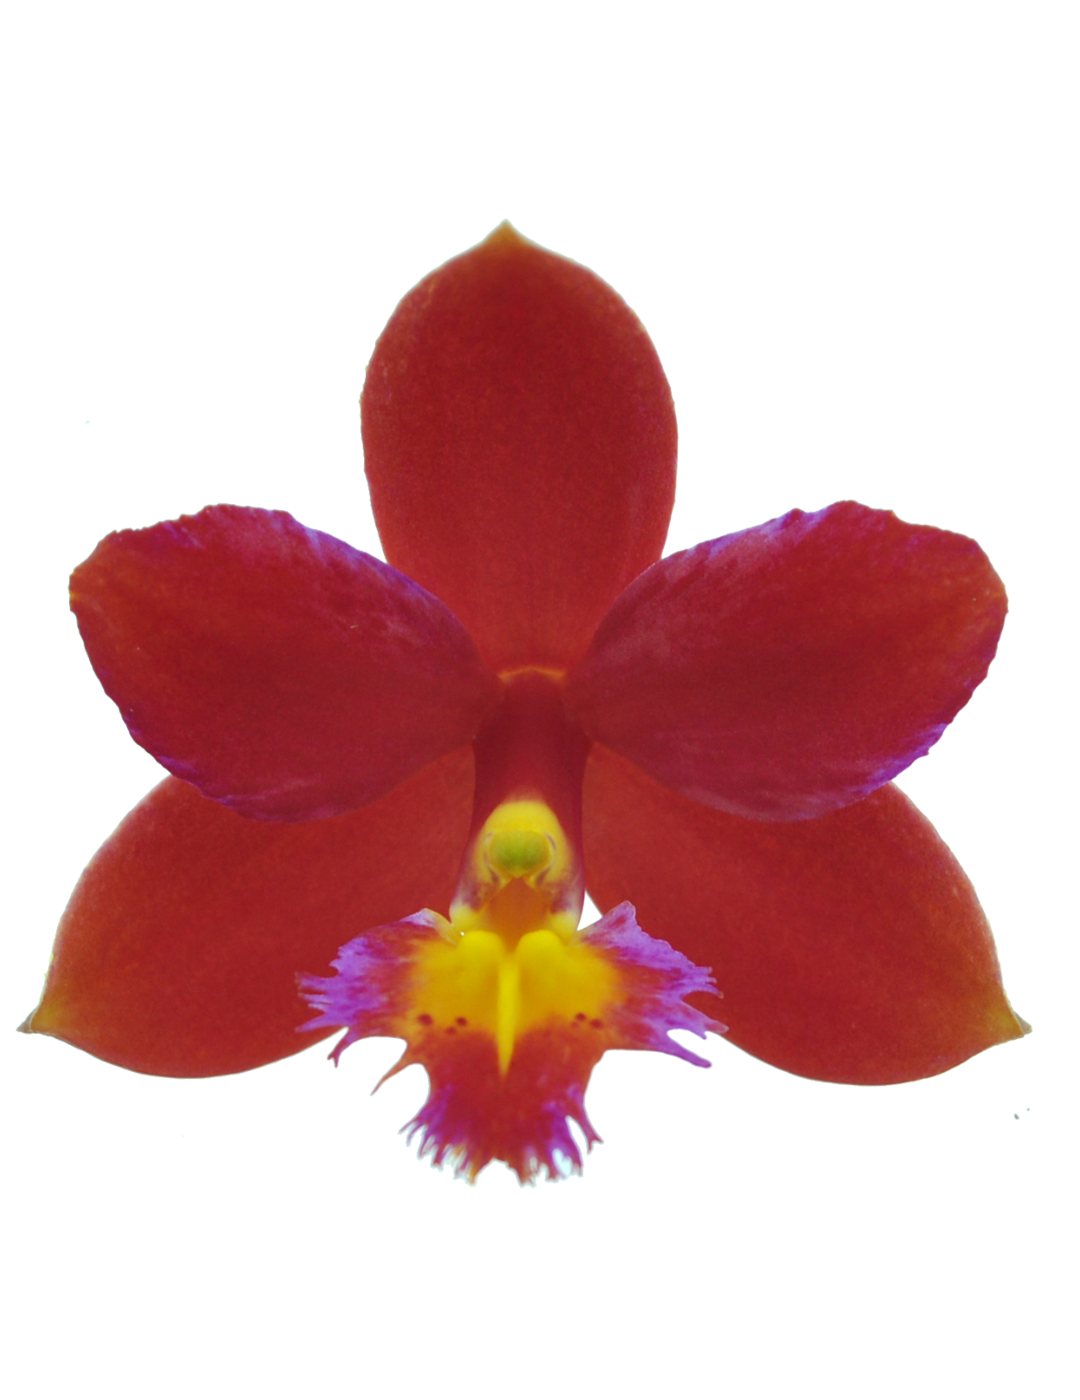 Epidendrum Radicans Red